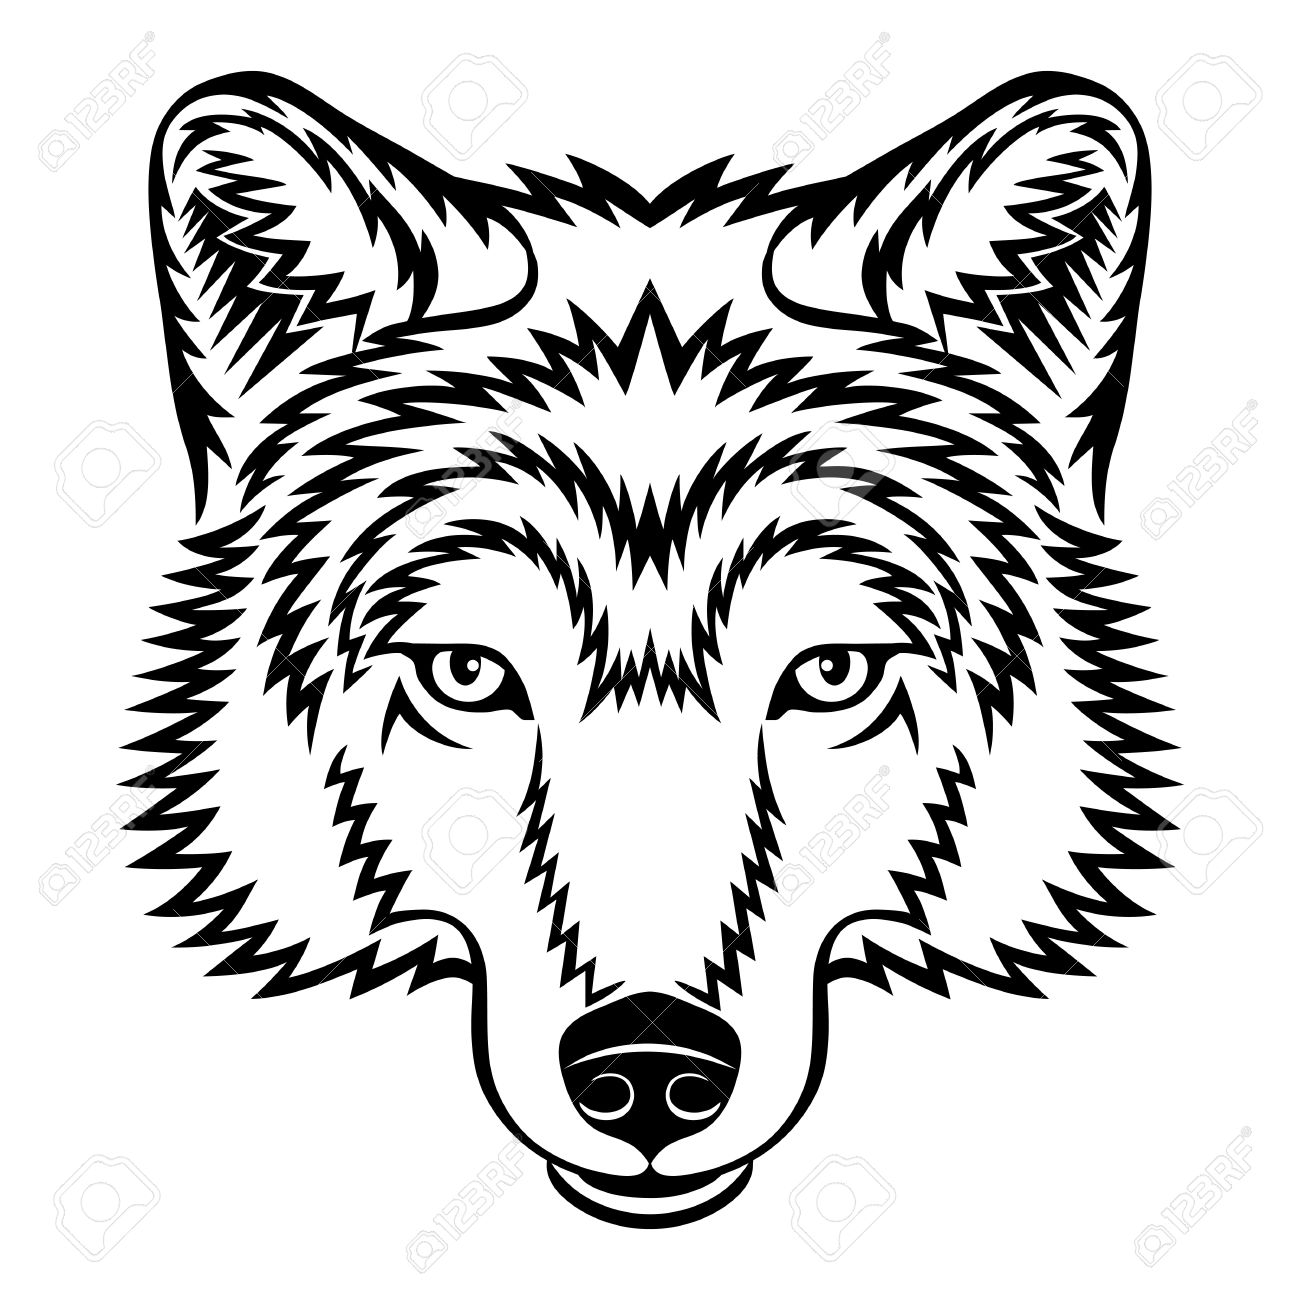 wolf head: A Wolf head in .